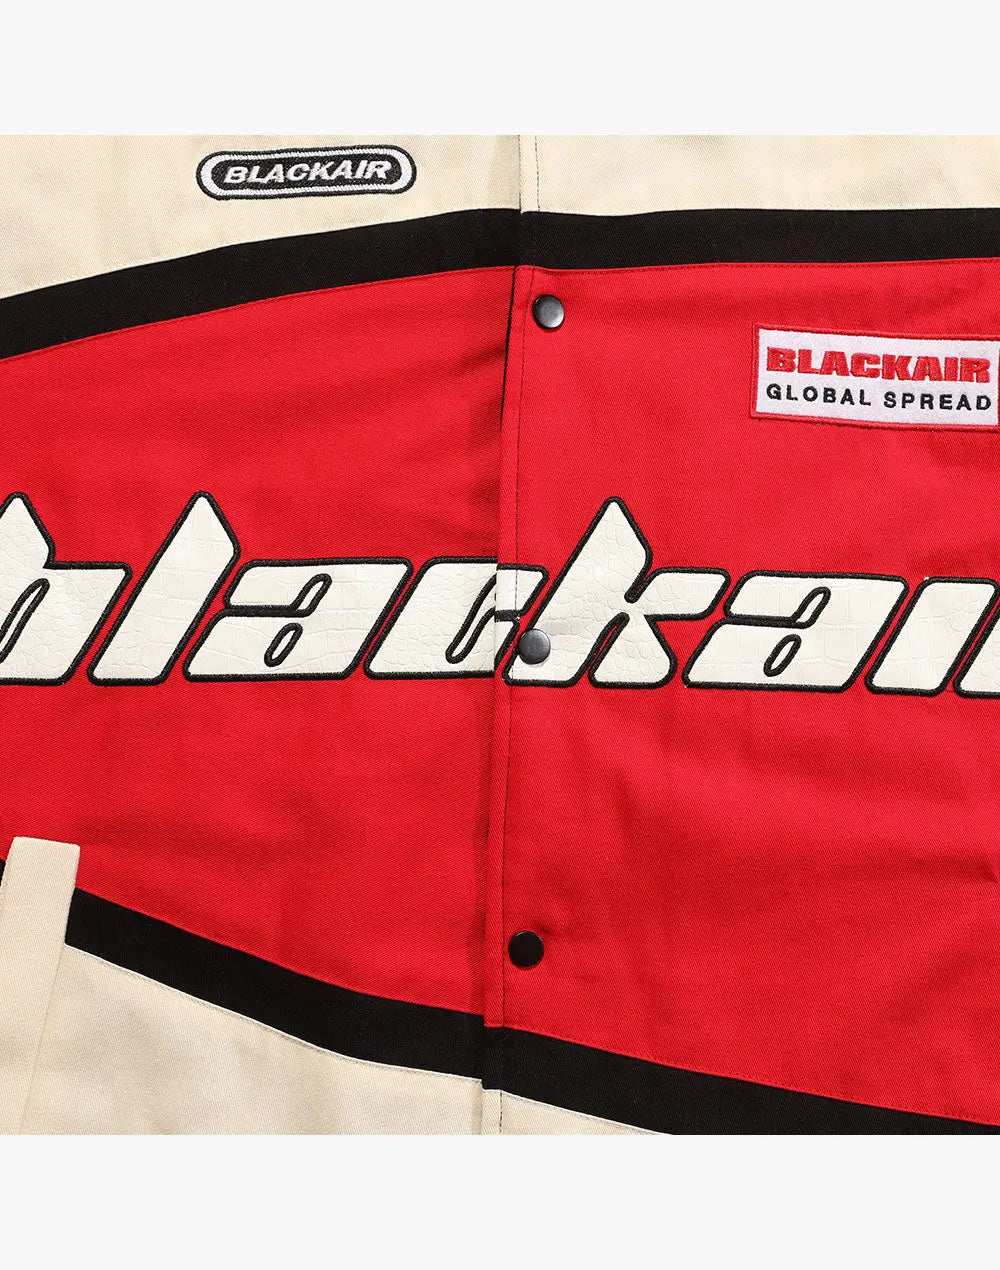 BlackAir Racing Jacket | Sleek and Stylish | High Street Pink